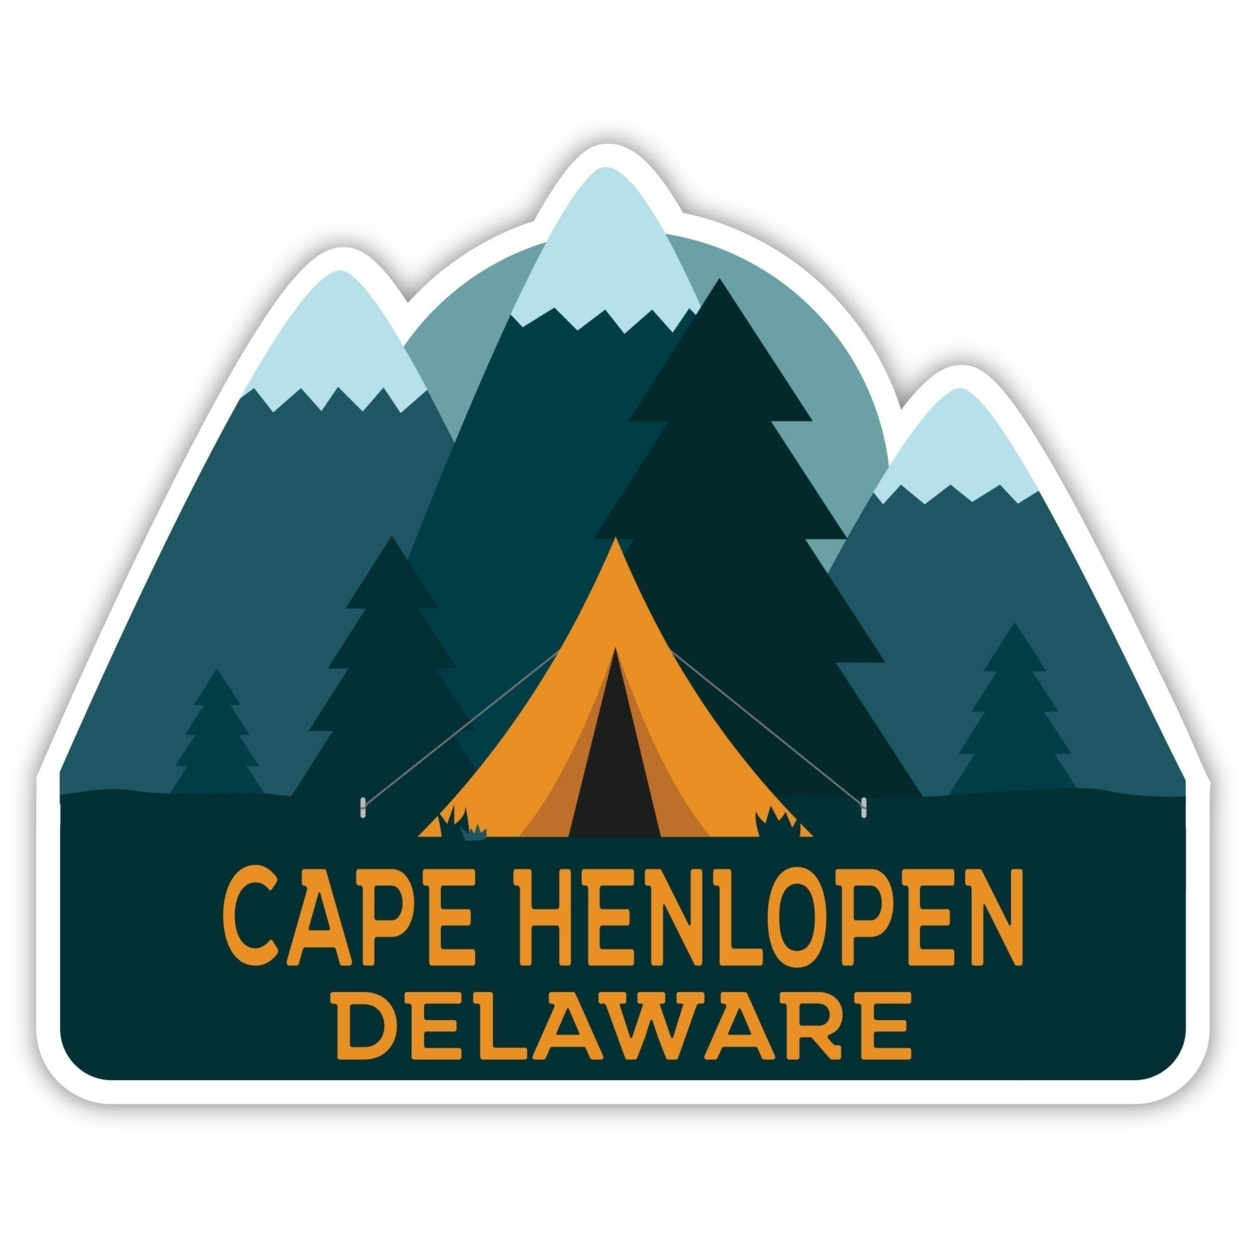 Cape Henlopen Delaware Souvenir Decorative Stickers (Choose Theme And Size) - 4-Pack, 4-Inch, Tent